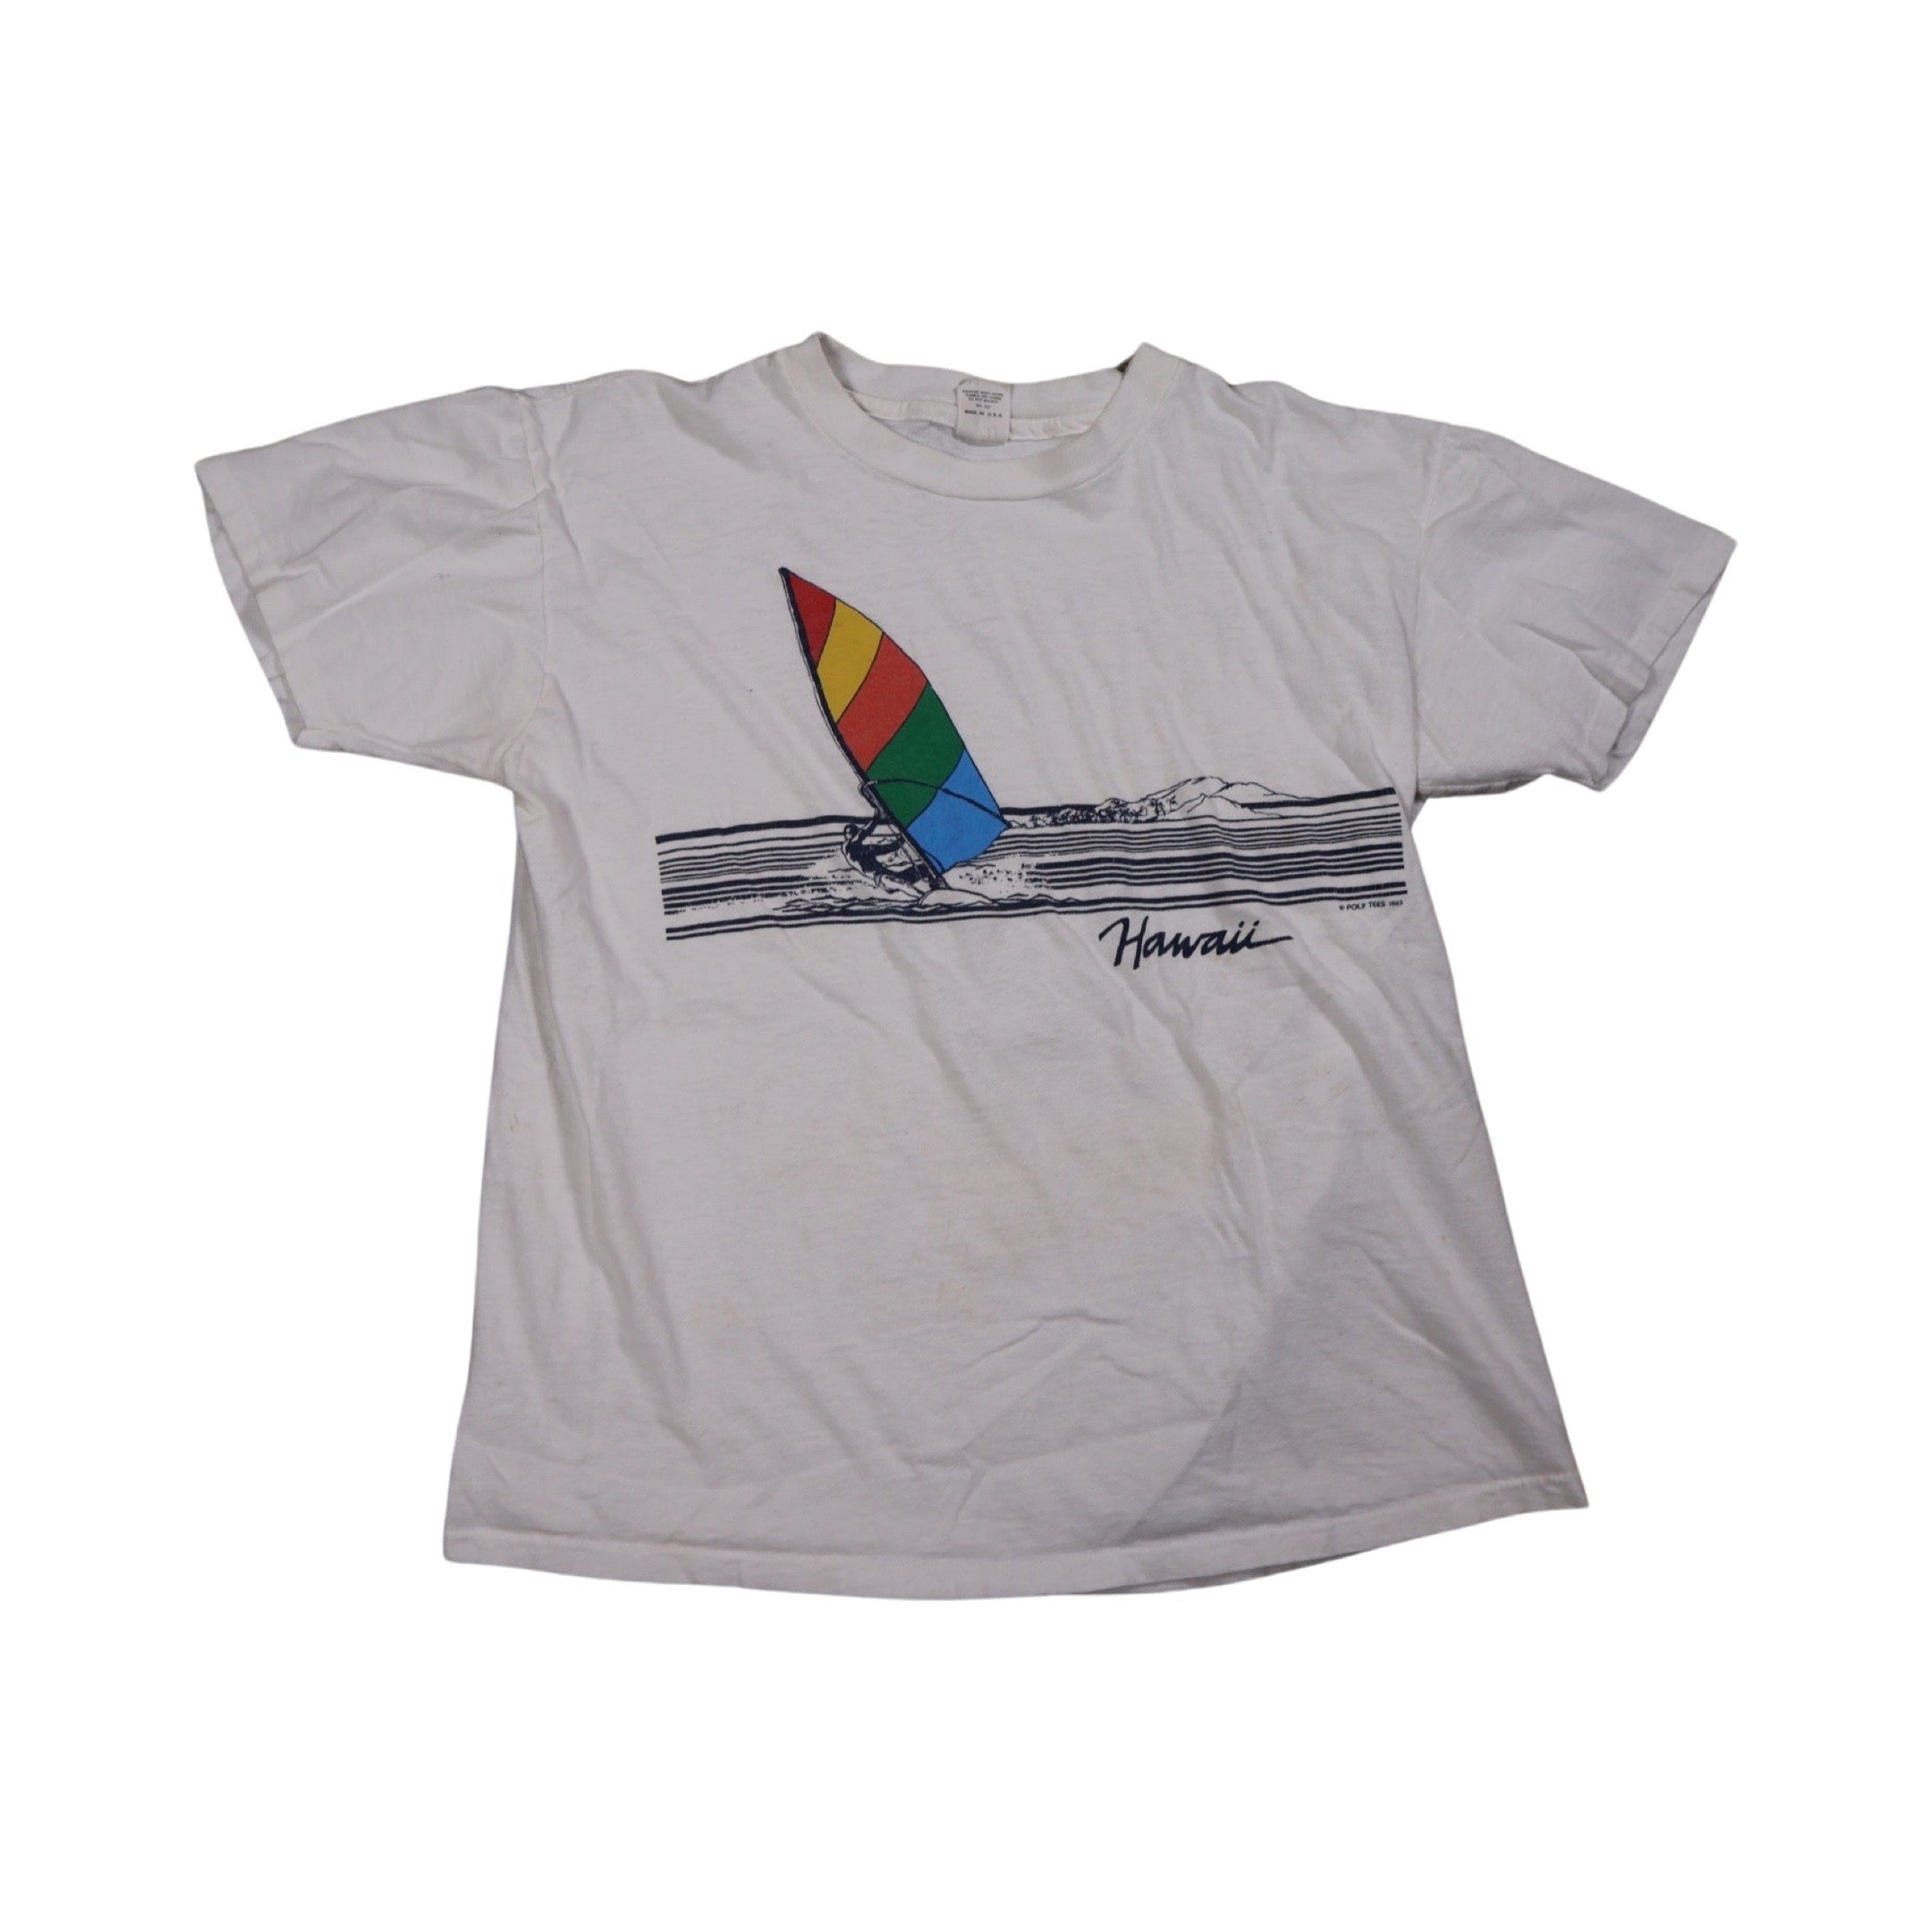 Hawaii Windsurfing 1983 T-Shirt (Medium)